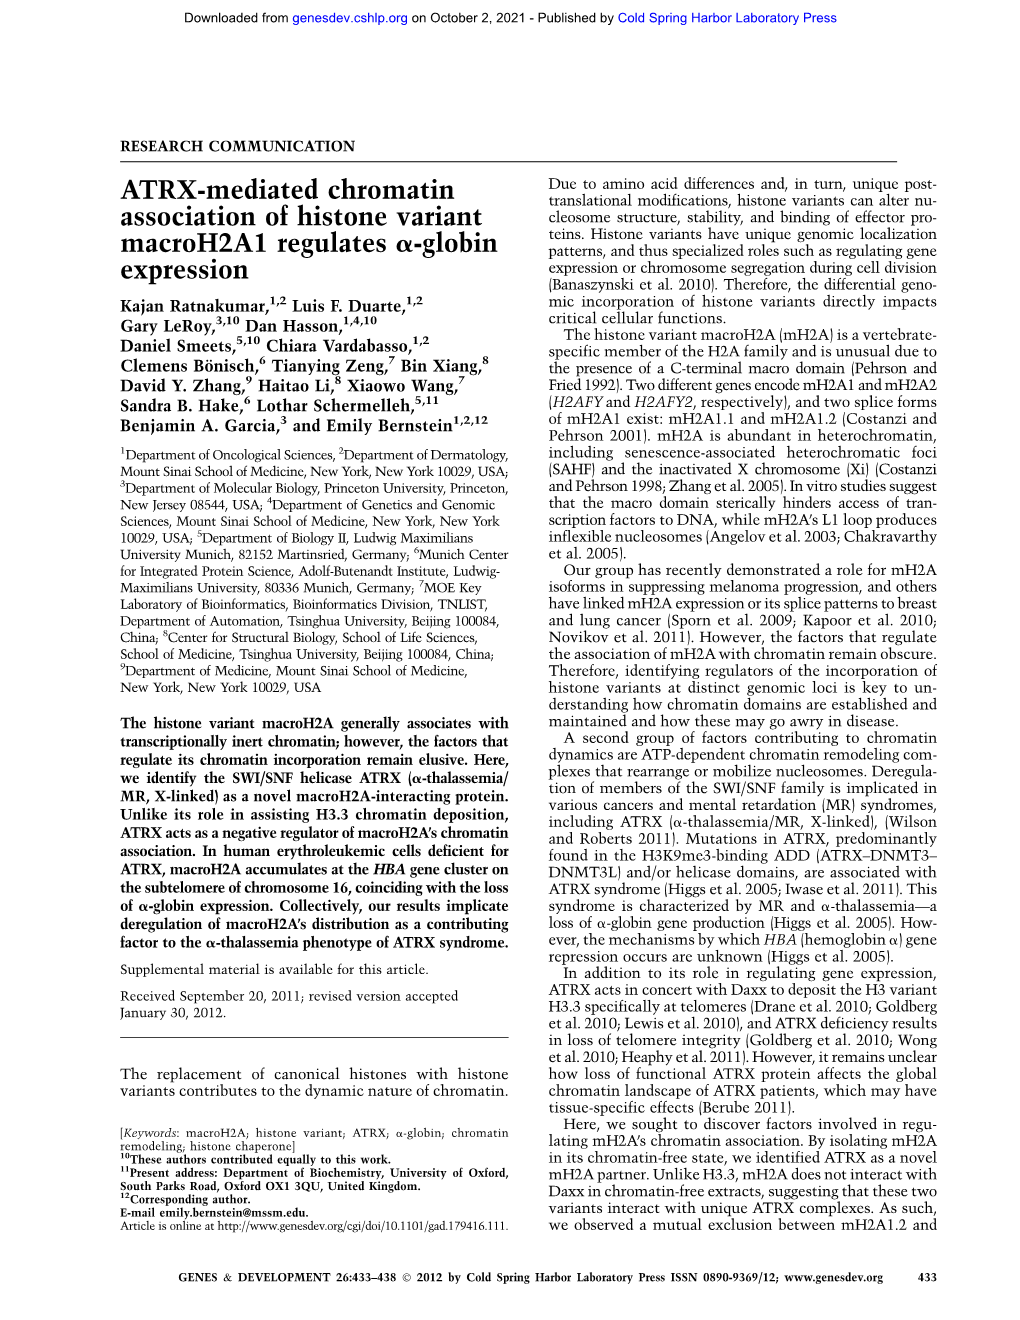 ATRX-Mediated Chromatin Association of Histone Variant Macroh2a1 Regulates Α-Globin Expression